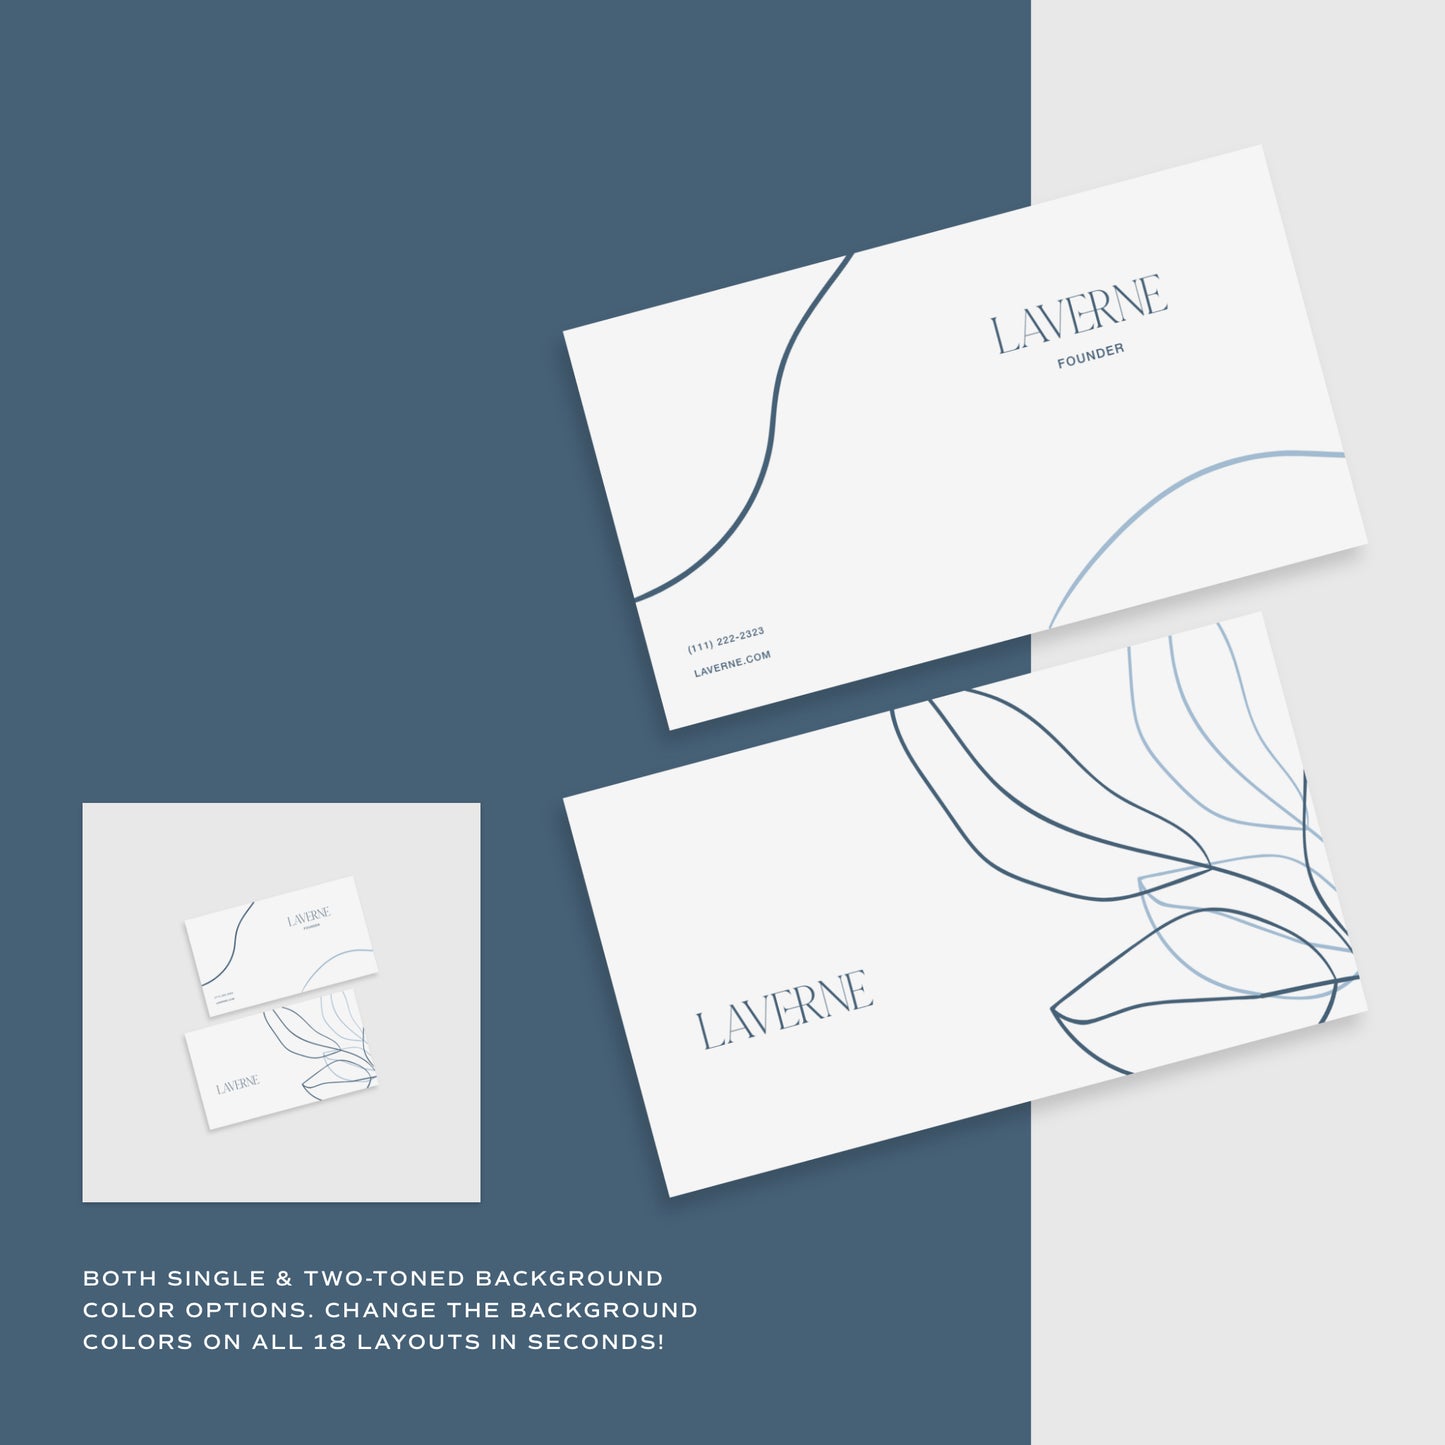 Laverne - Minimalist Business Card Mockup Bundle